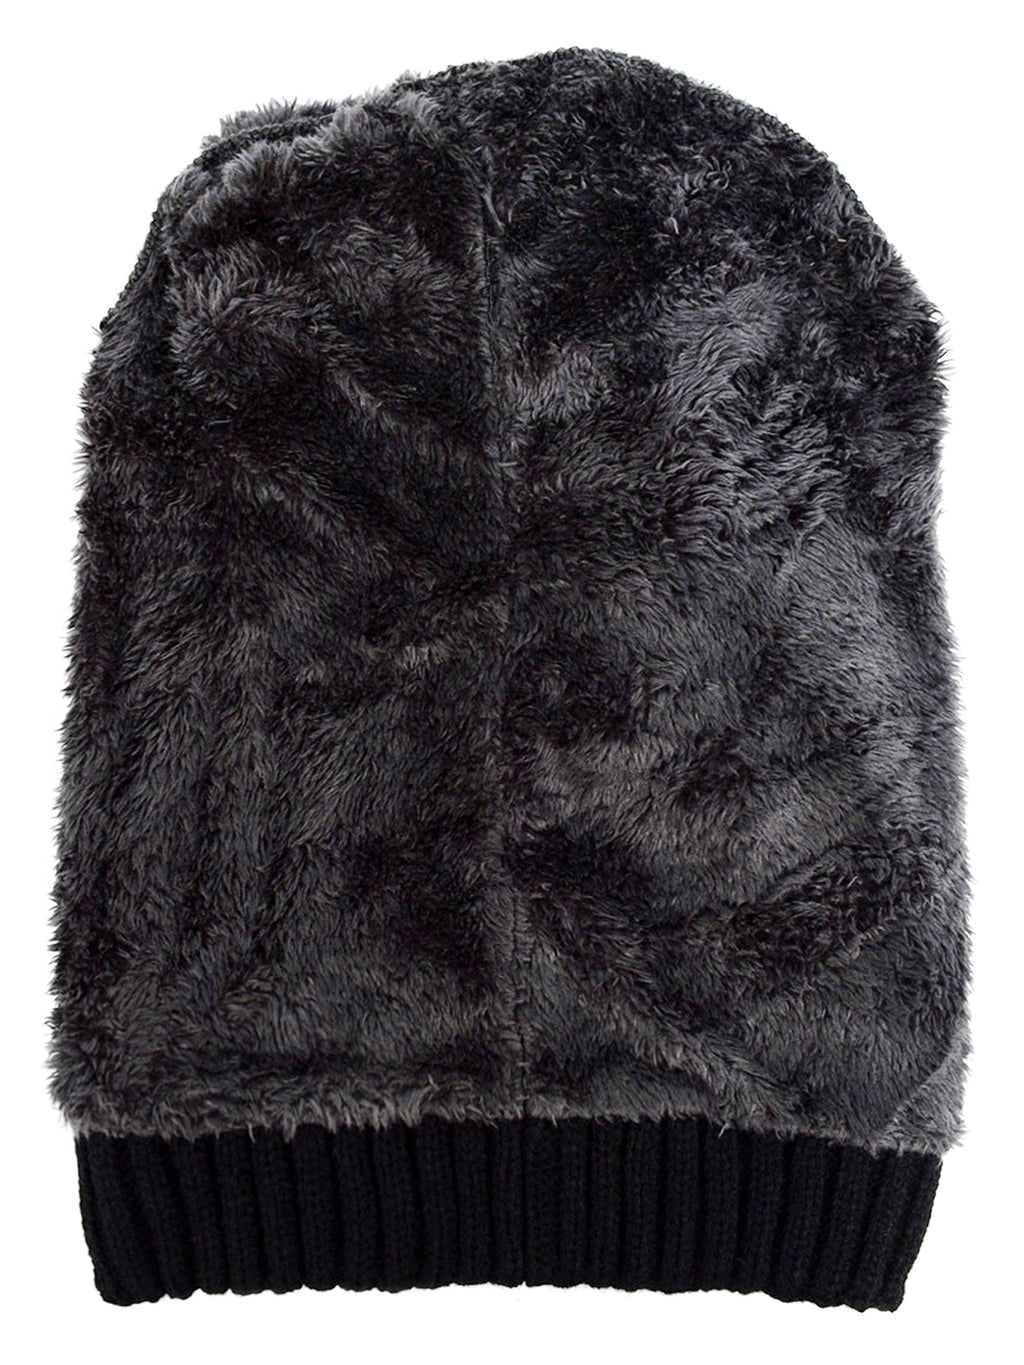 Men's Fur Lined Winter Beanie